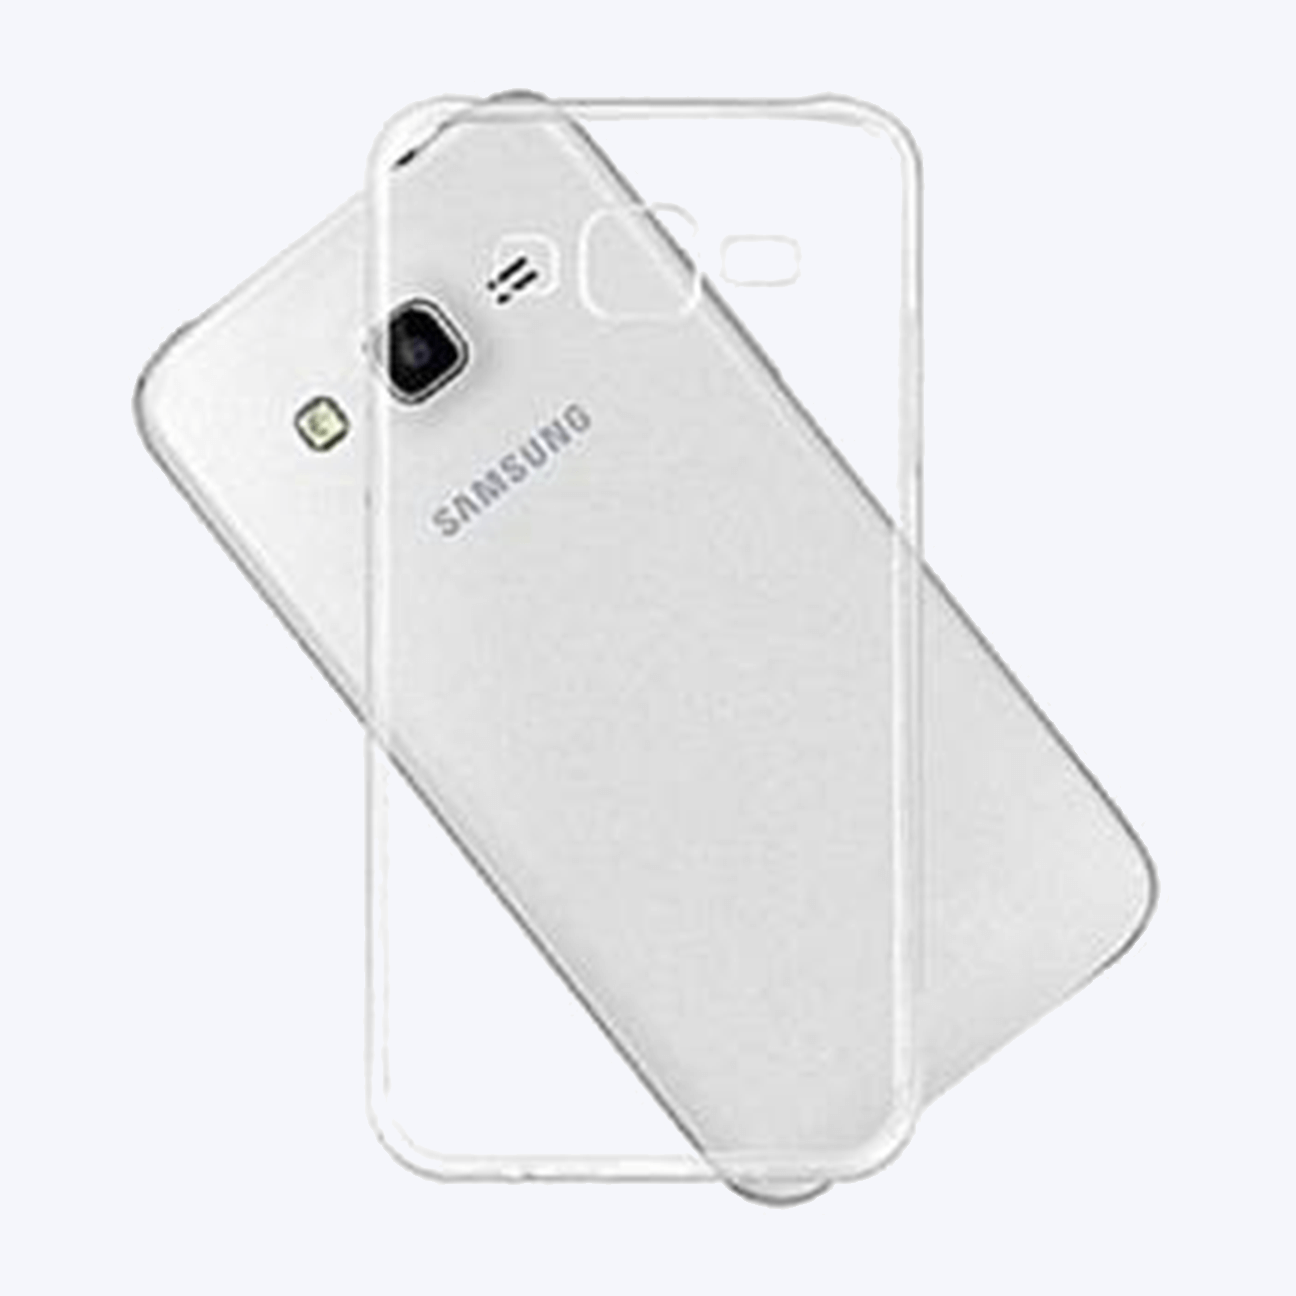 Samsung Galaxy J3 Duos Transparent Back Cover